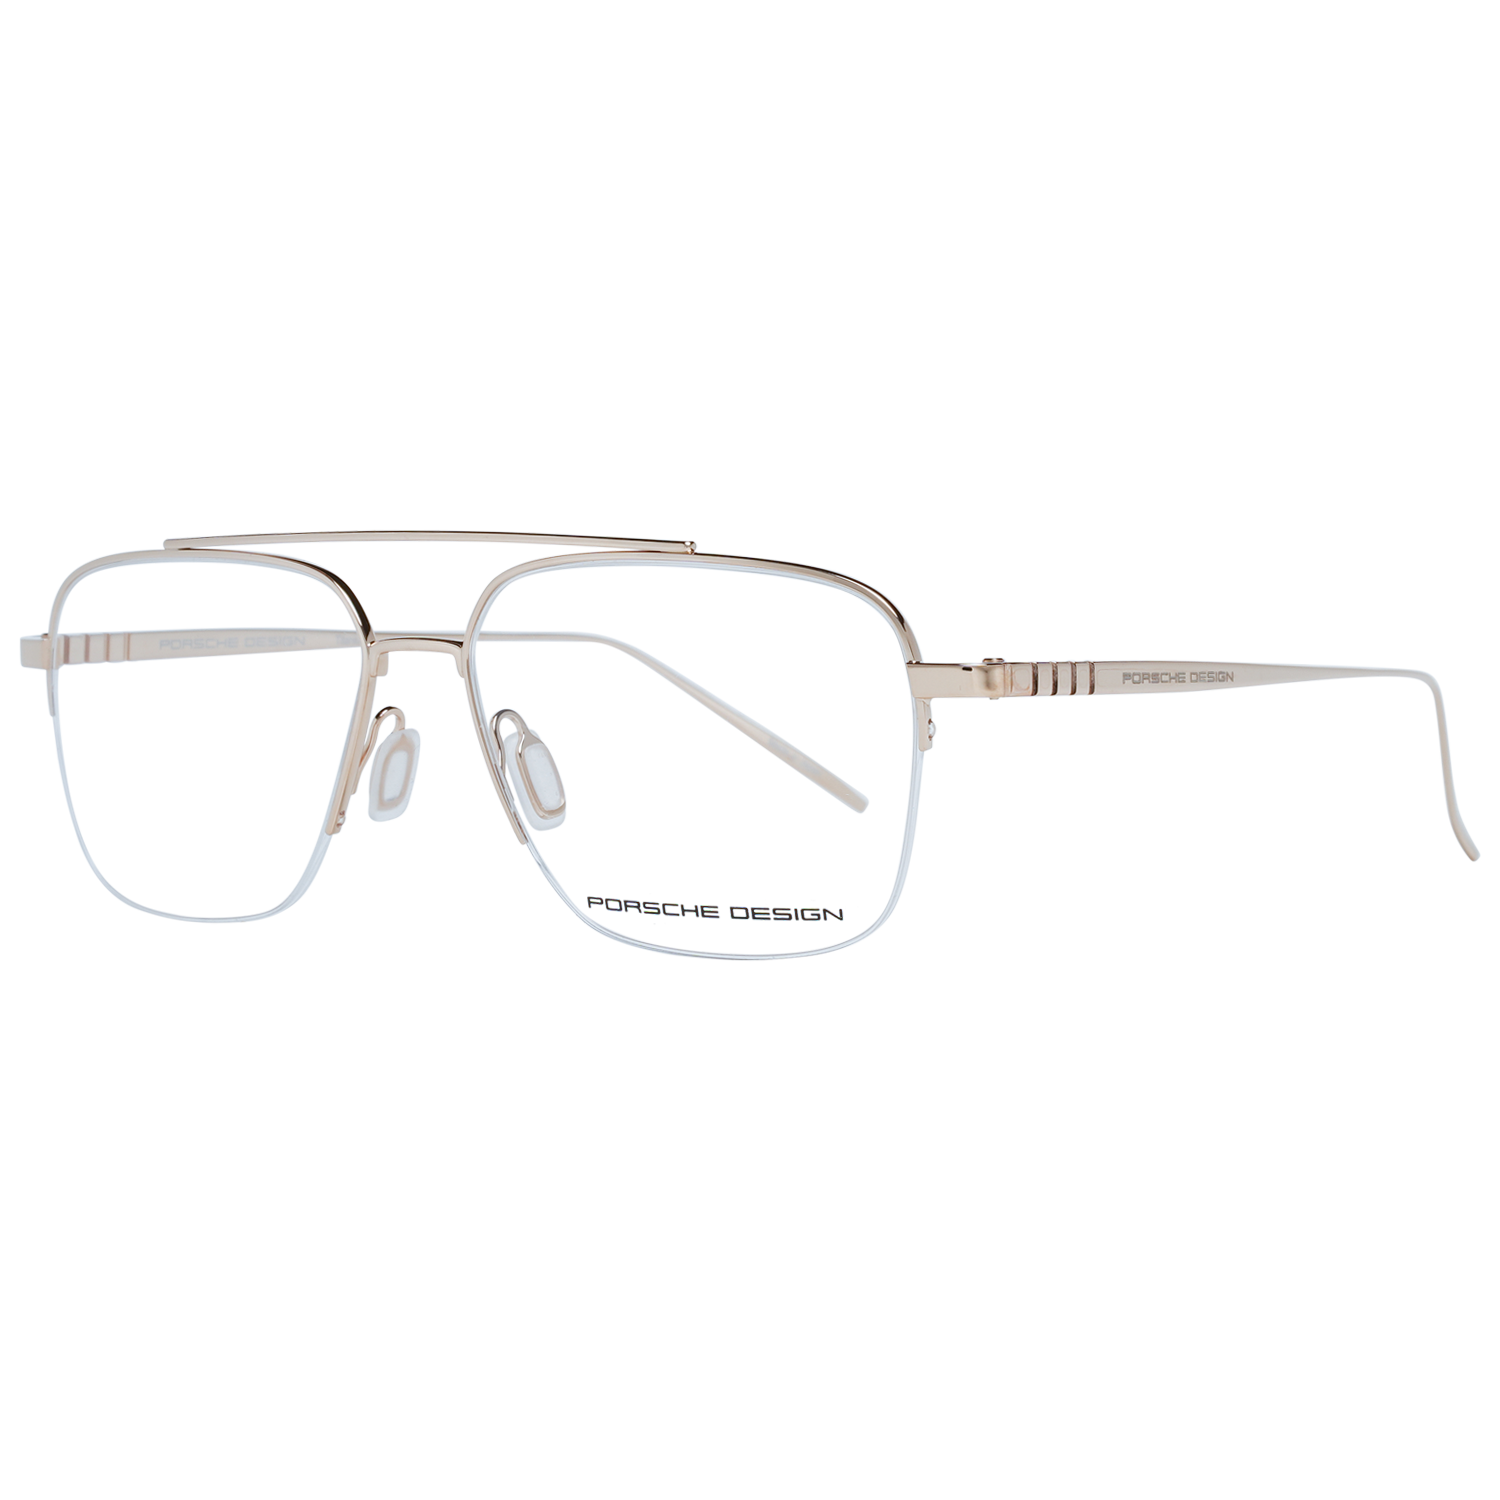 Porsche Design Eyeglasses Porsche Design Glasses Frames P8359 B 54mm Titanium Eyeglasses Eyewear UK USA Australia 